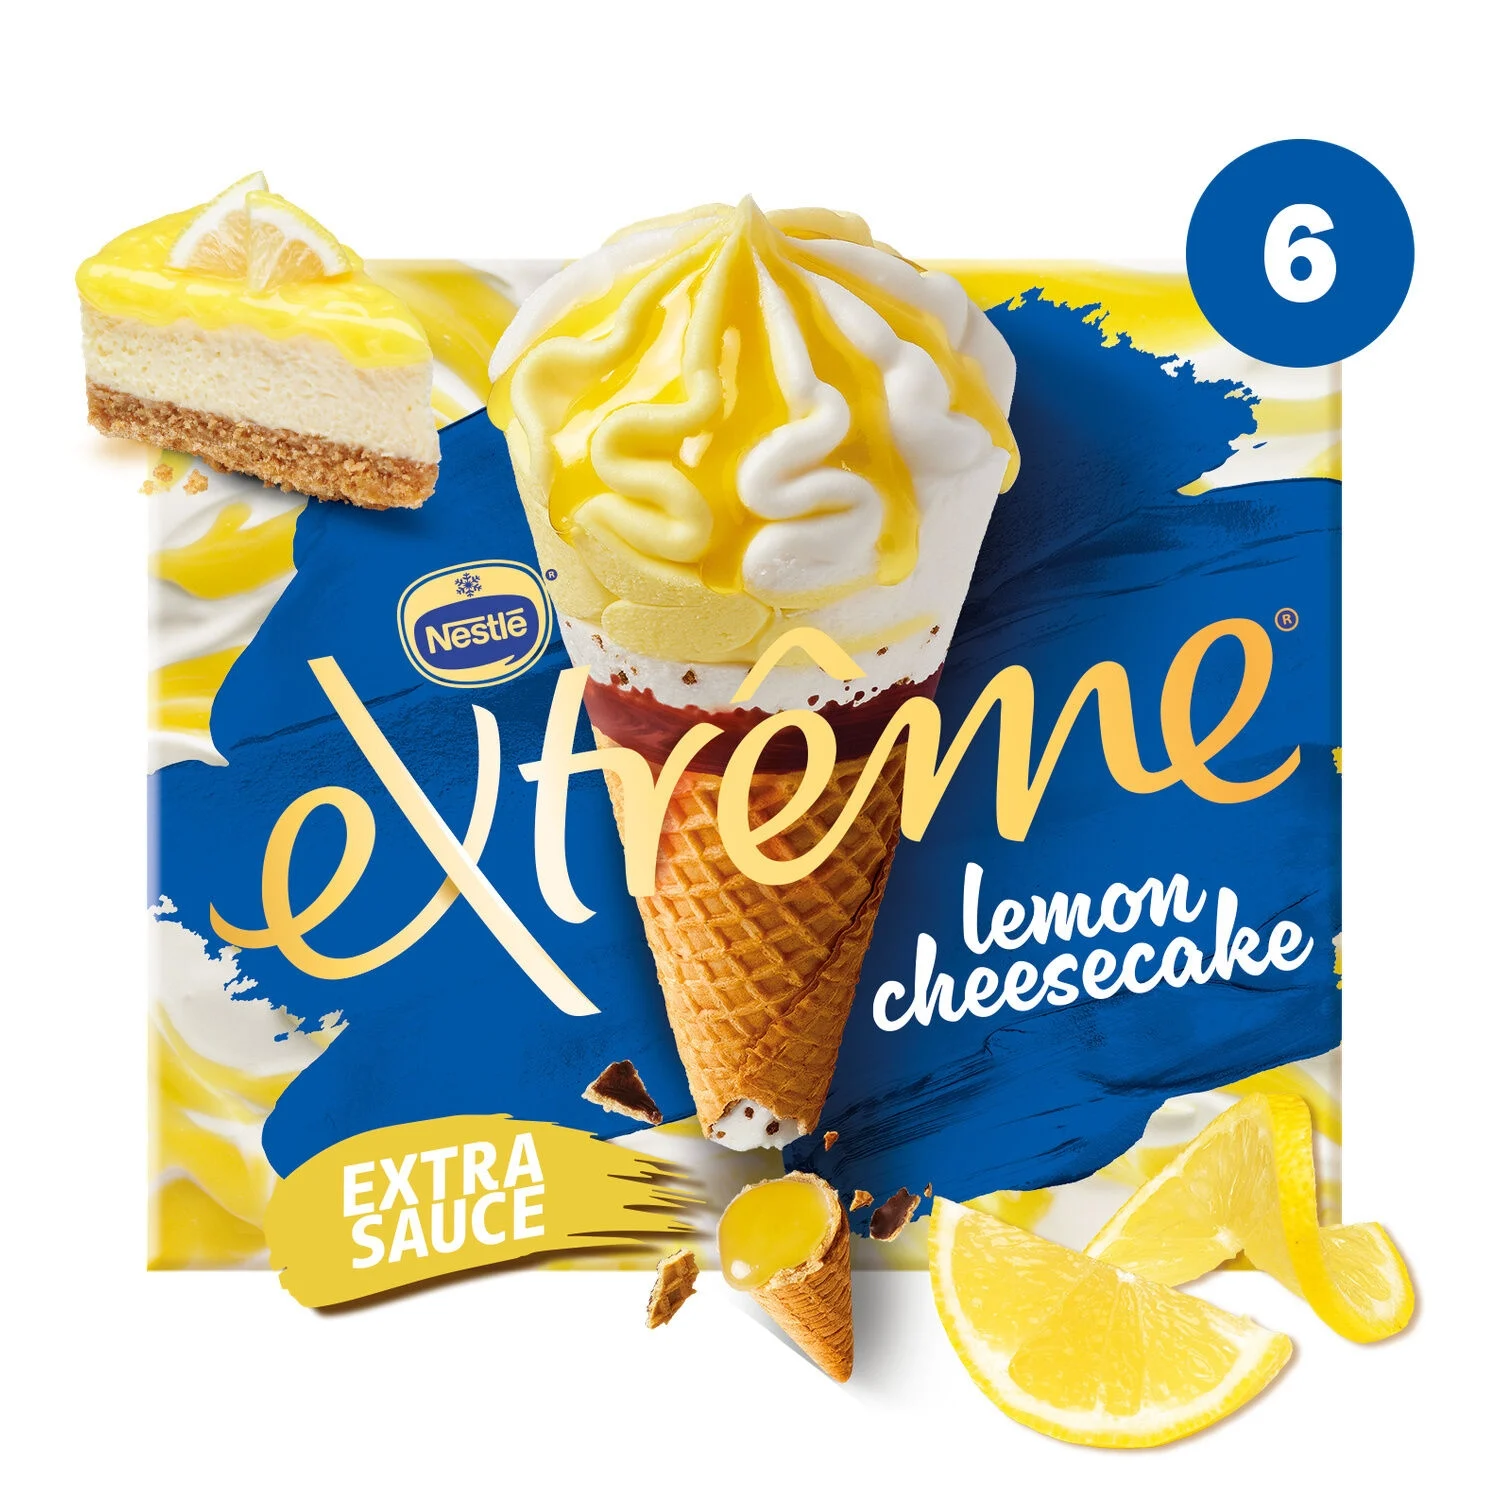 426g Extreme Lemon Cheesecake